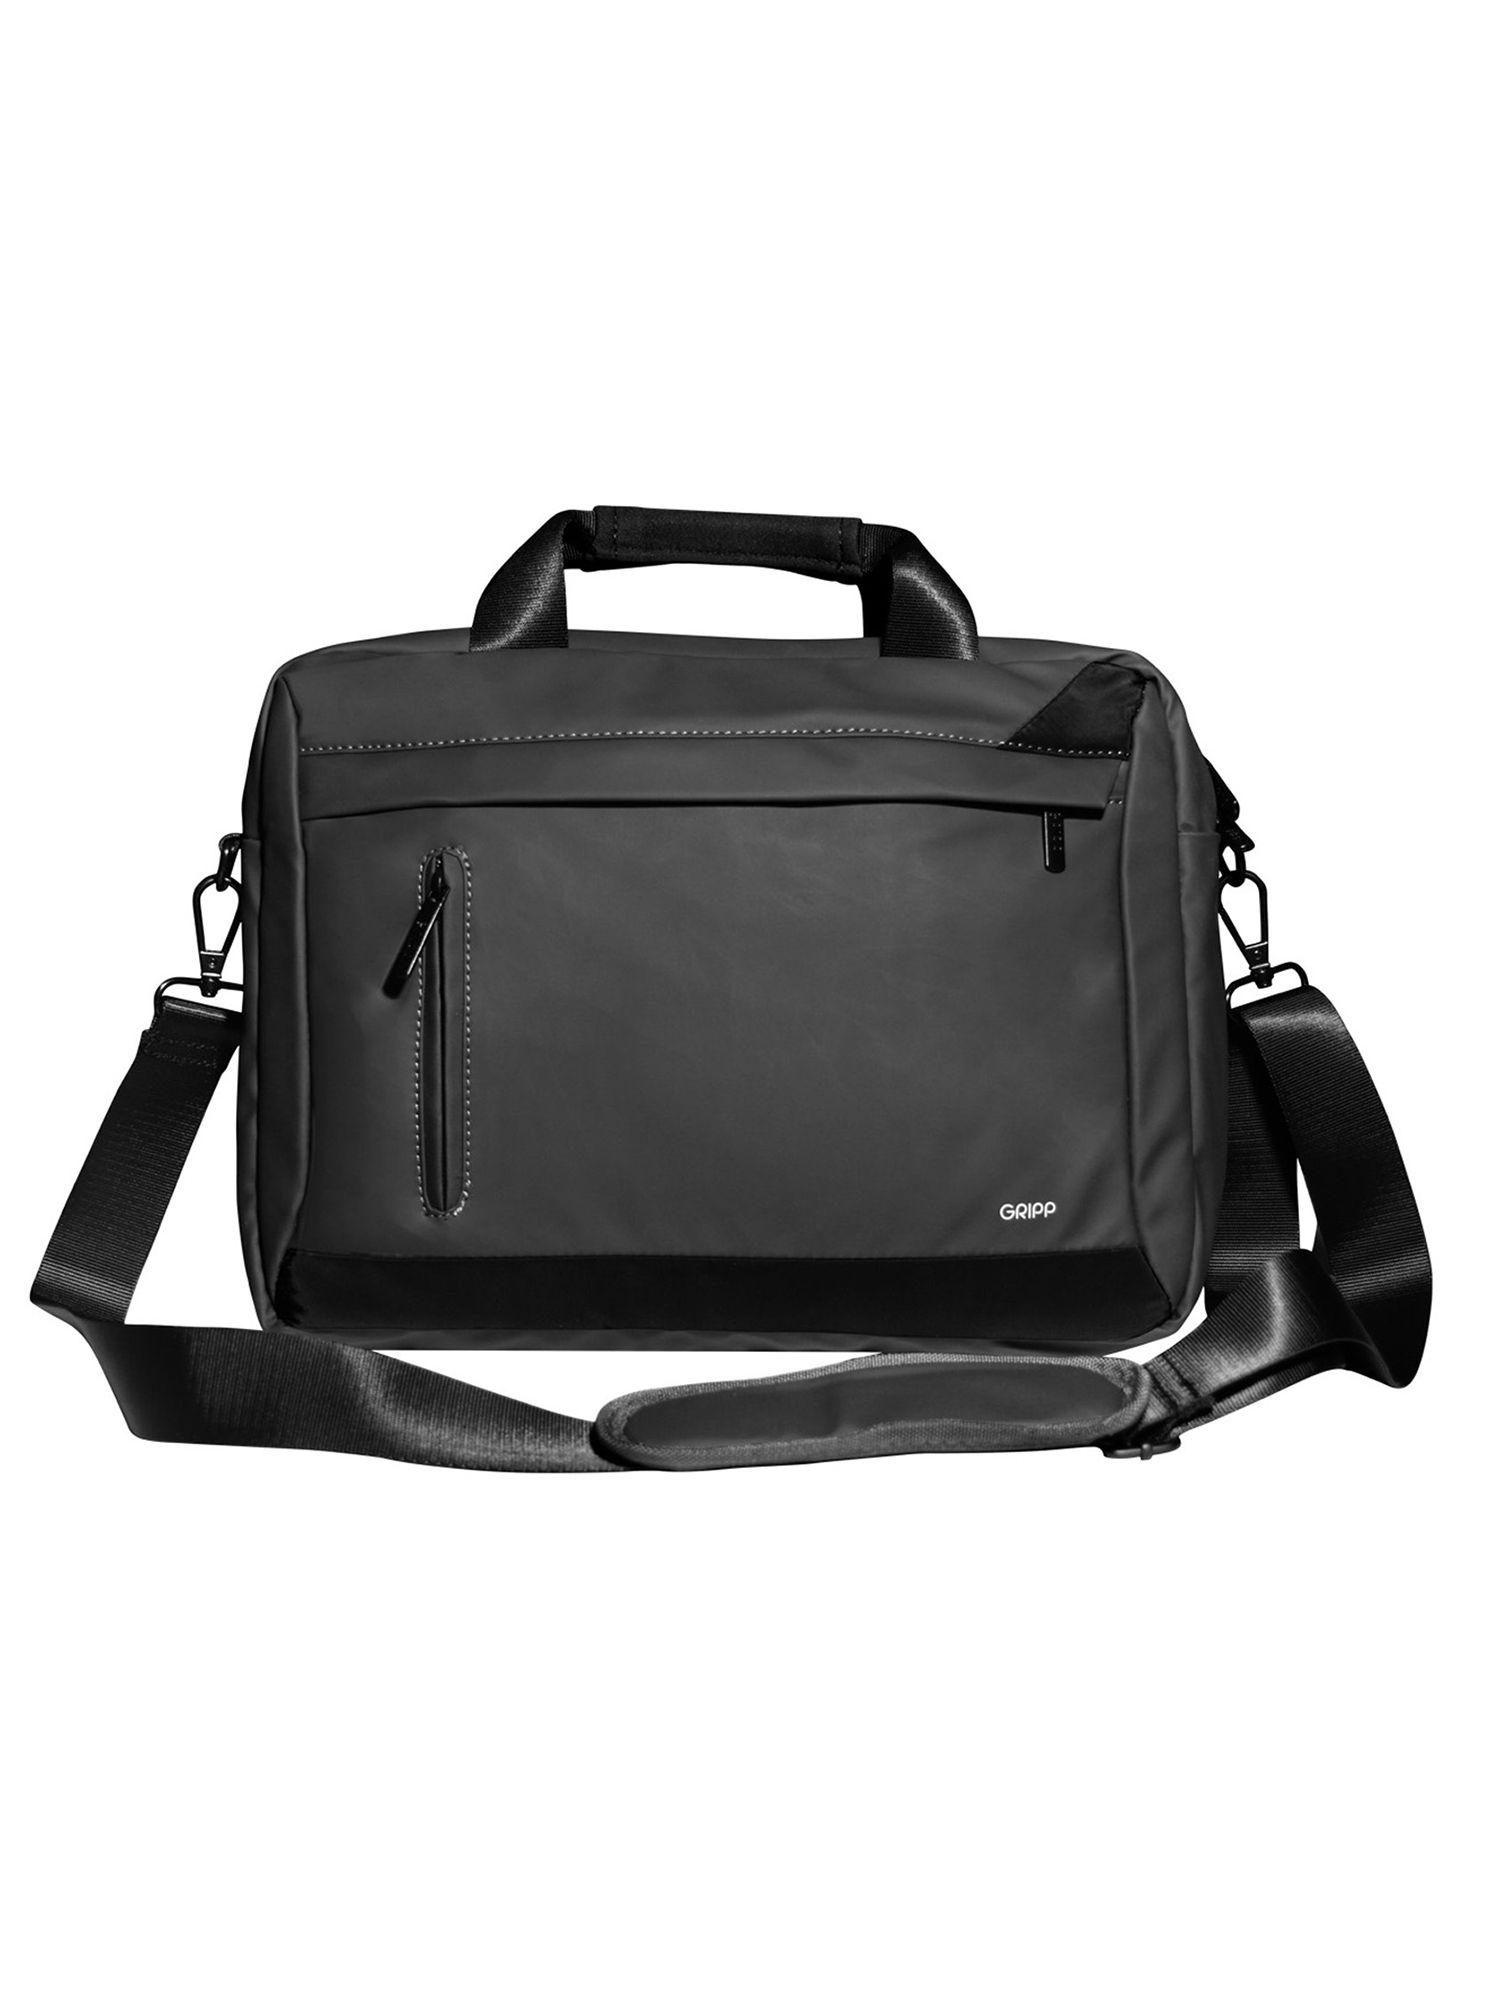 ribana nylon executive business topload messenger laptop bag 15.6 inch - black